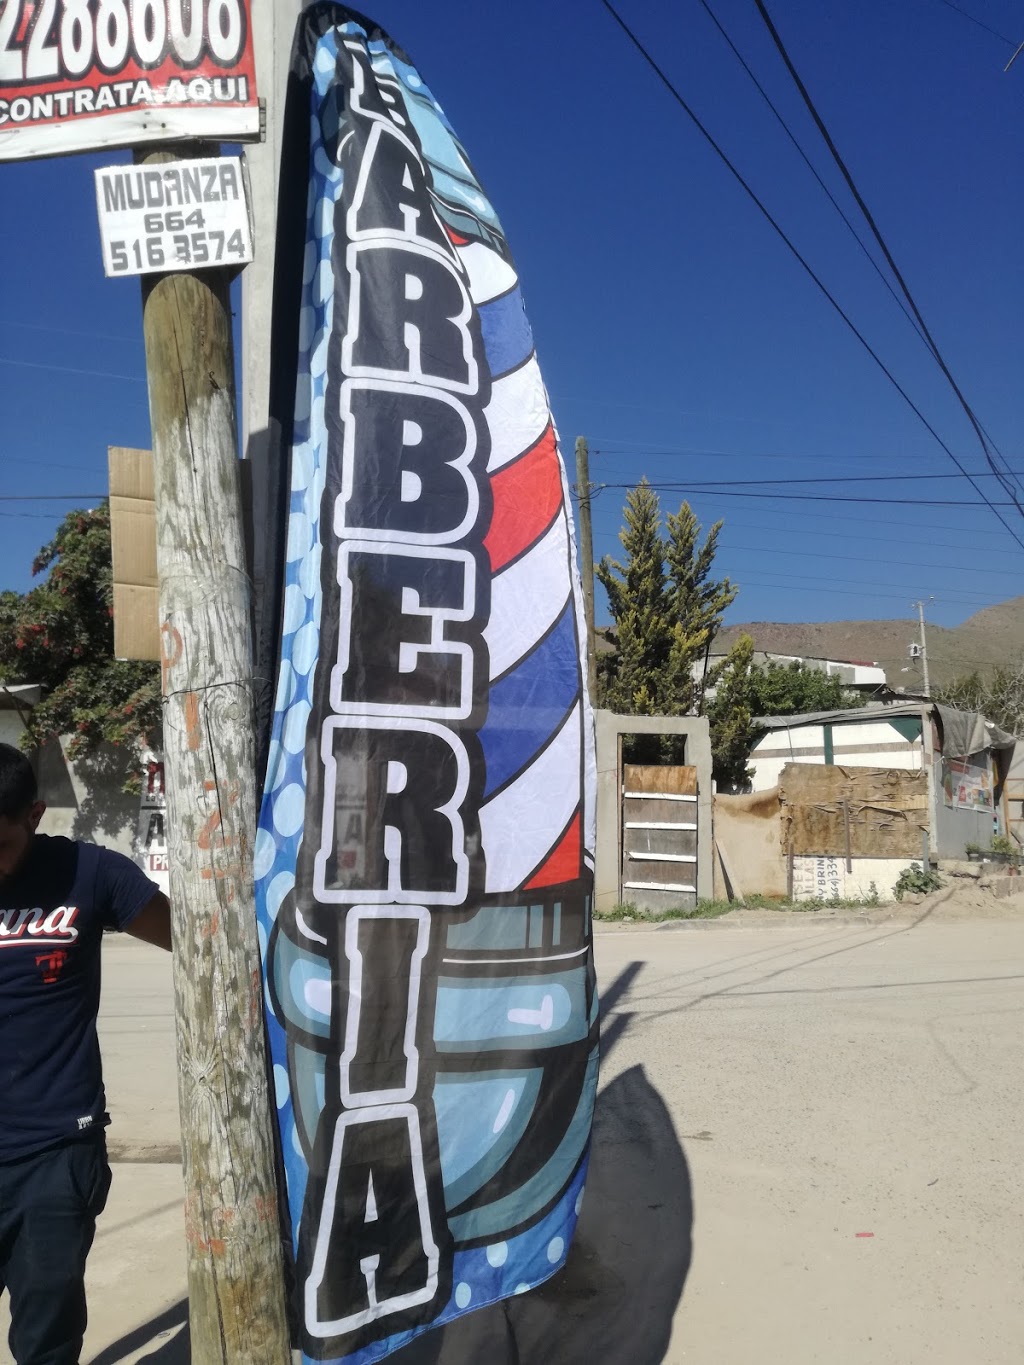 THC Barbería - hair care  | Photo 1 of 1 | Address: Hda San Miguel, Terrazas del Valle, 22246 Tijuana, B.C., Mexico | Phone: 664 504 0414